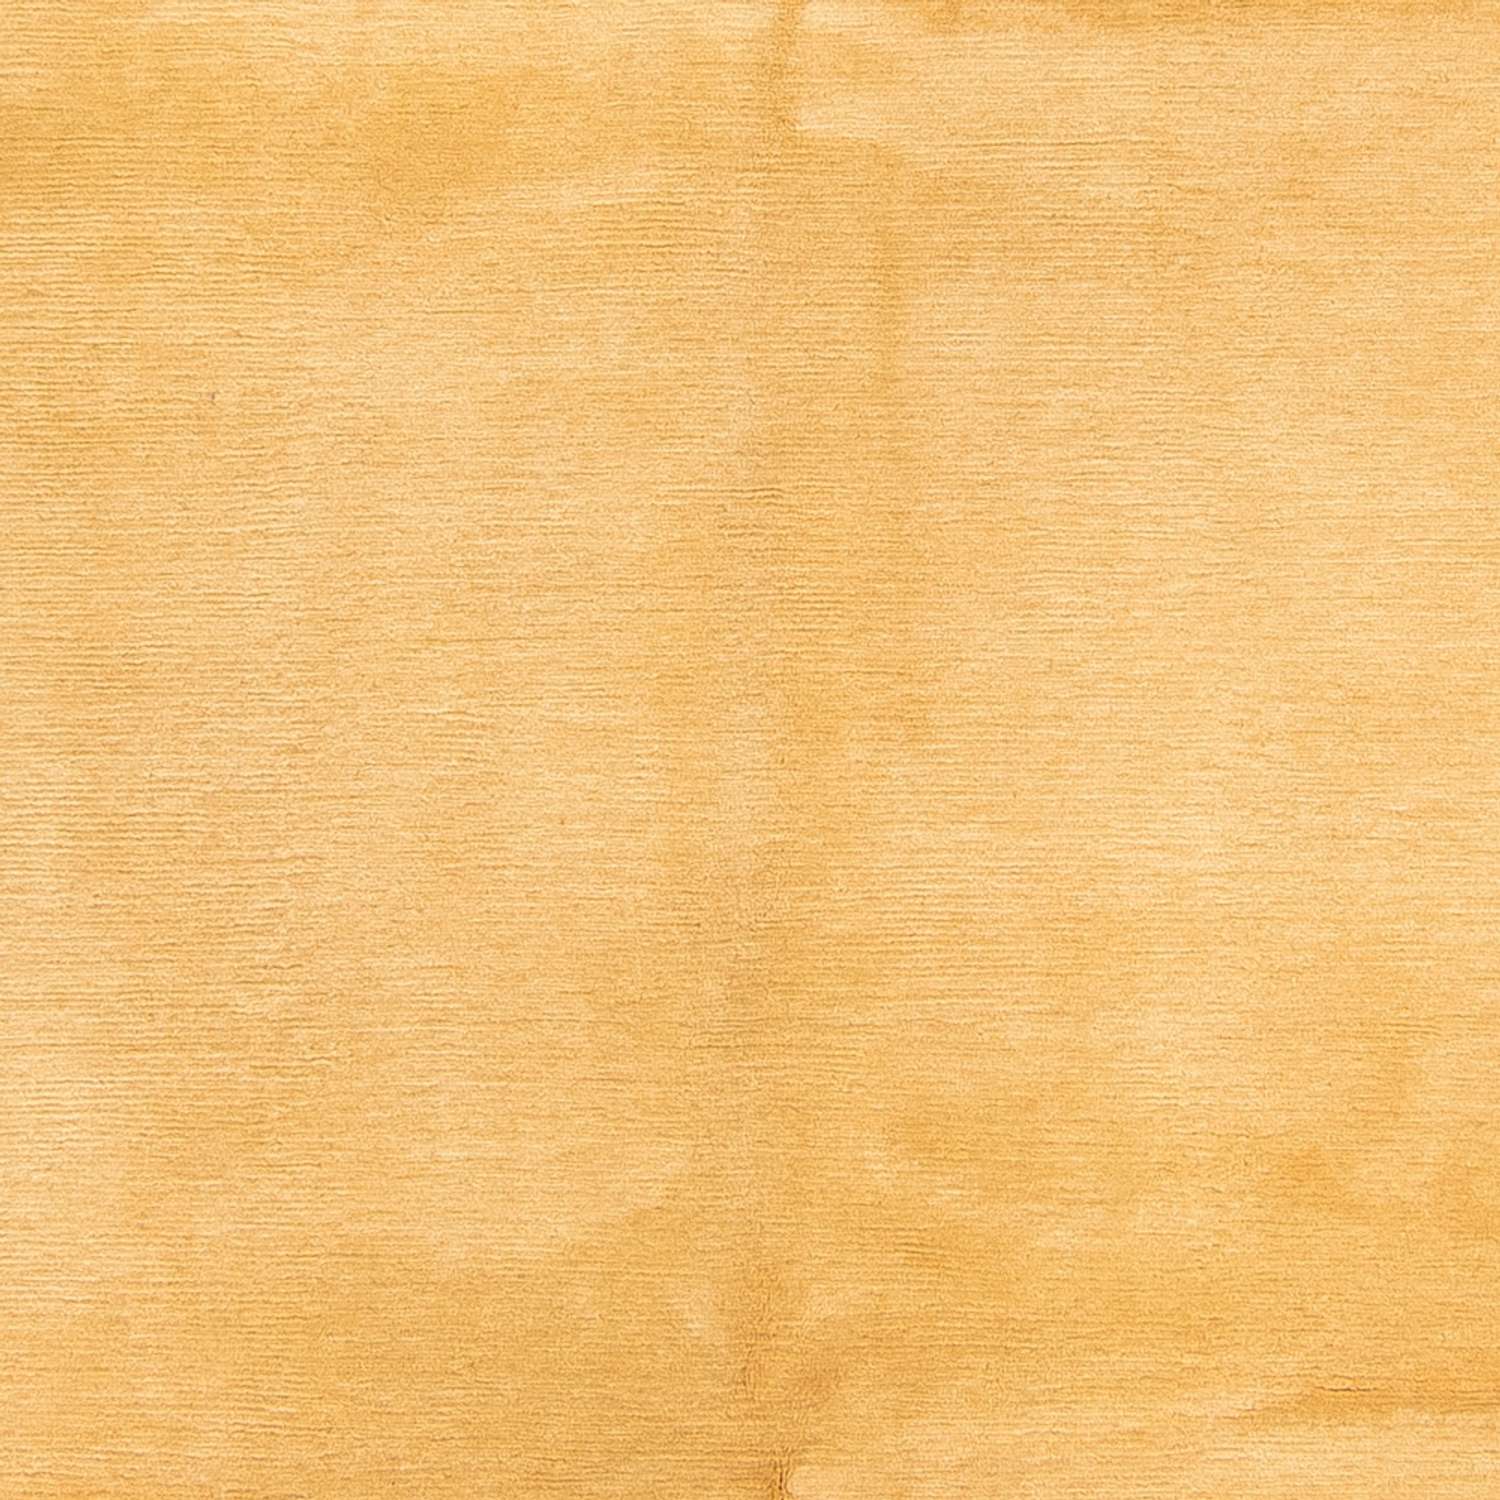 Nepal Rug - 296 x 200 cm - beige